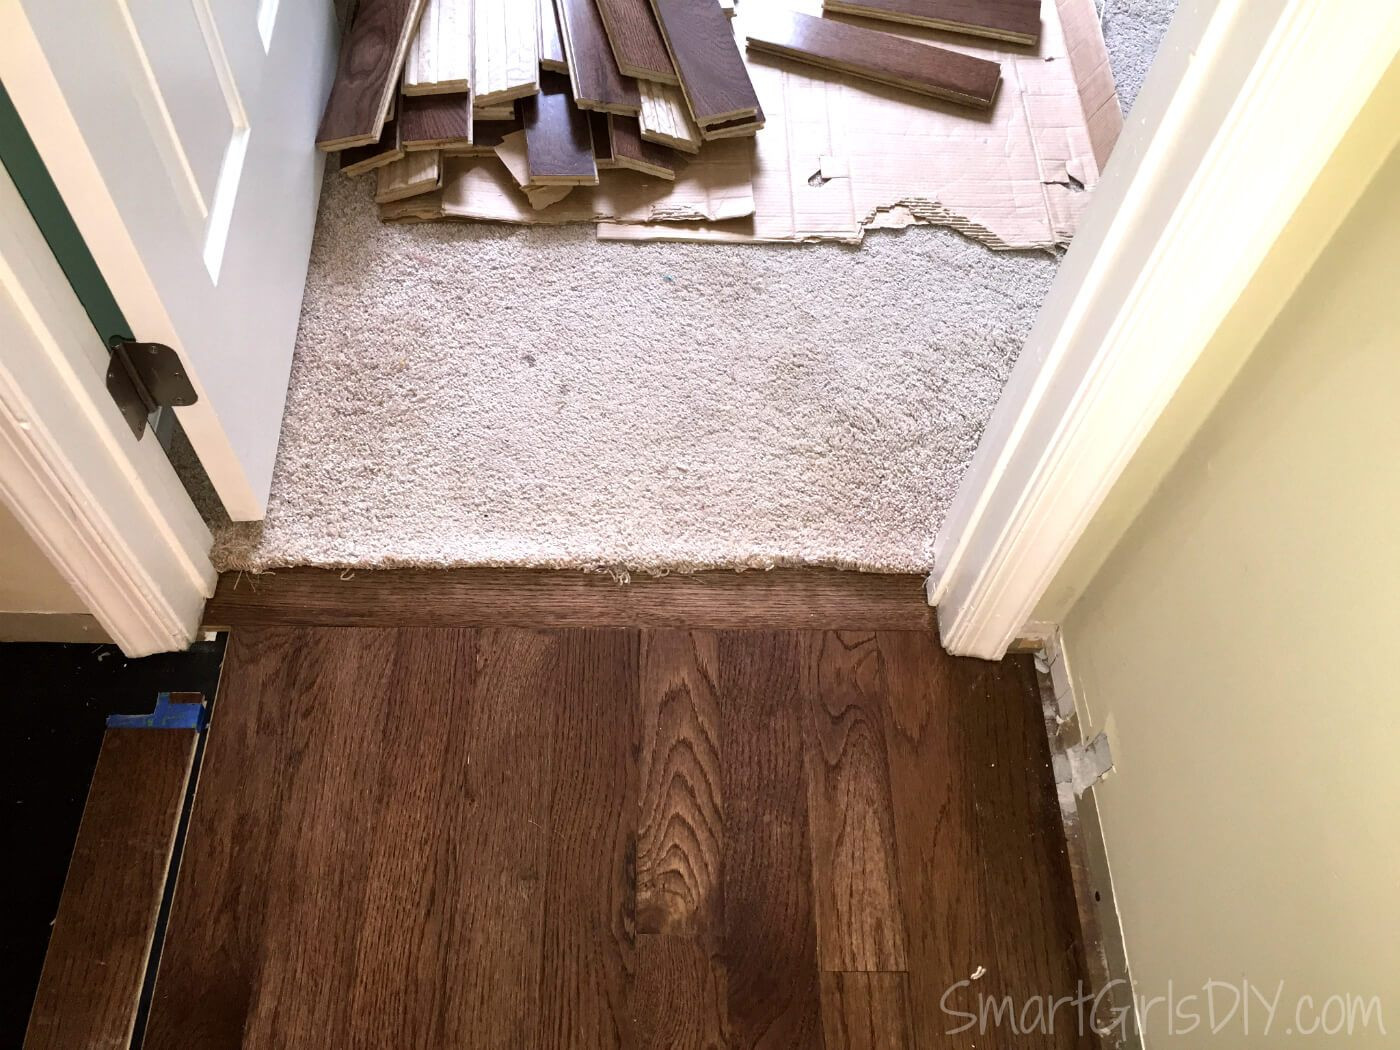 Best Mop for Hardwood Floors 2015 Of Upstairs Hallway 1 Installing Hardwood Floors Regarding Transition Between Carpet and Hardwood Floor